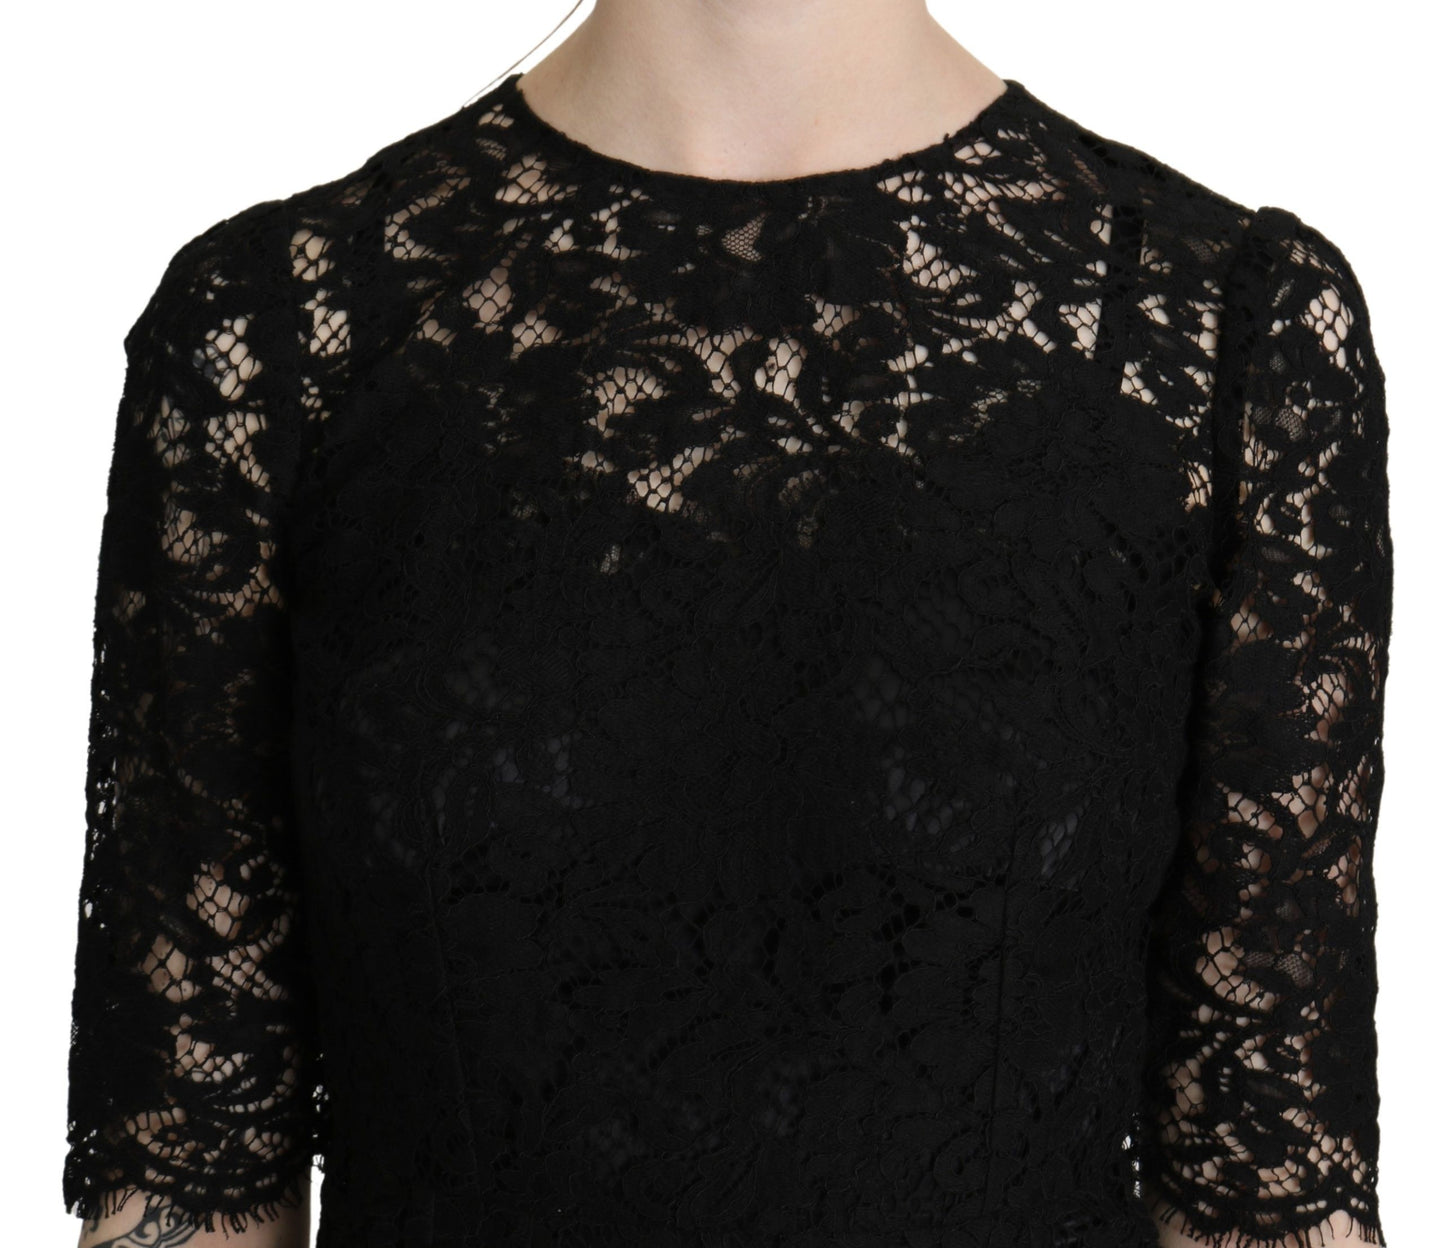 Black Floral Lace Sheath Knee Length Dress